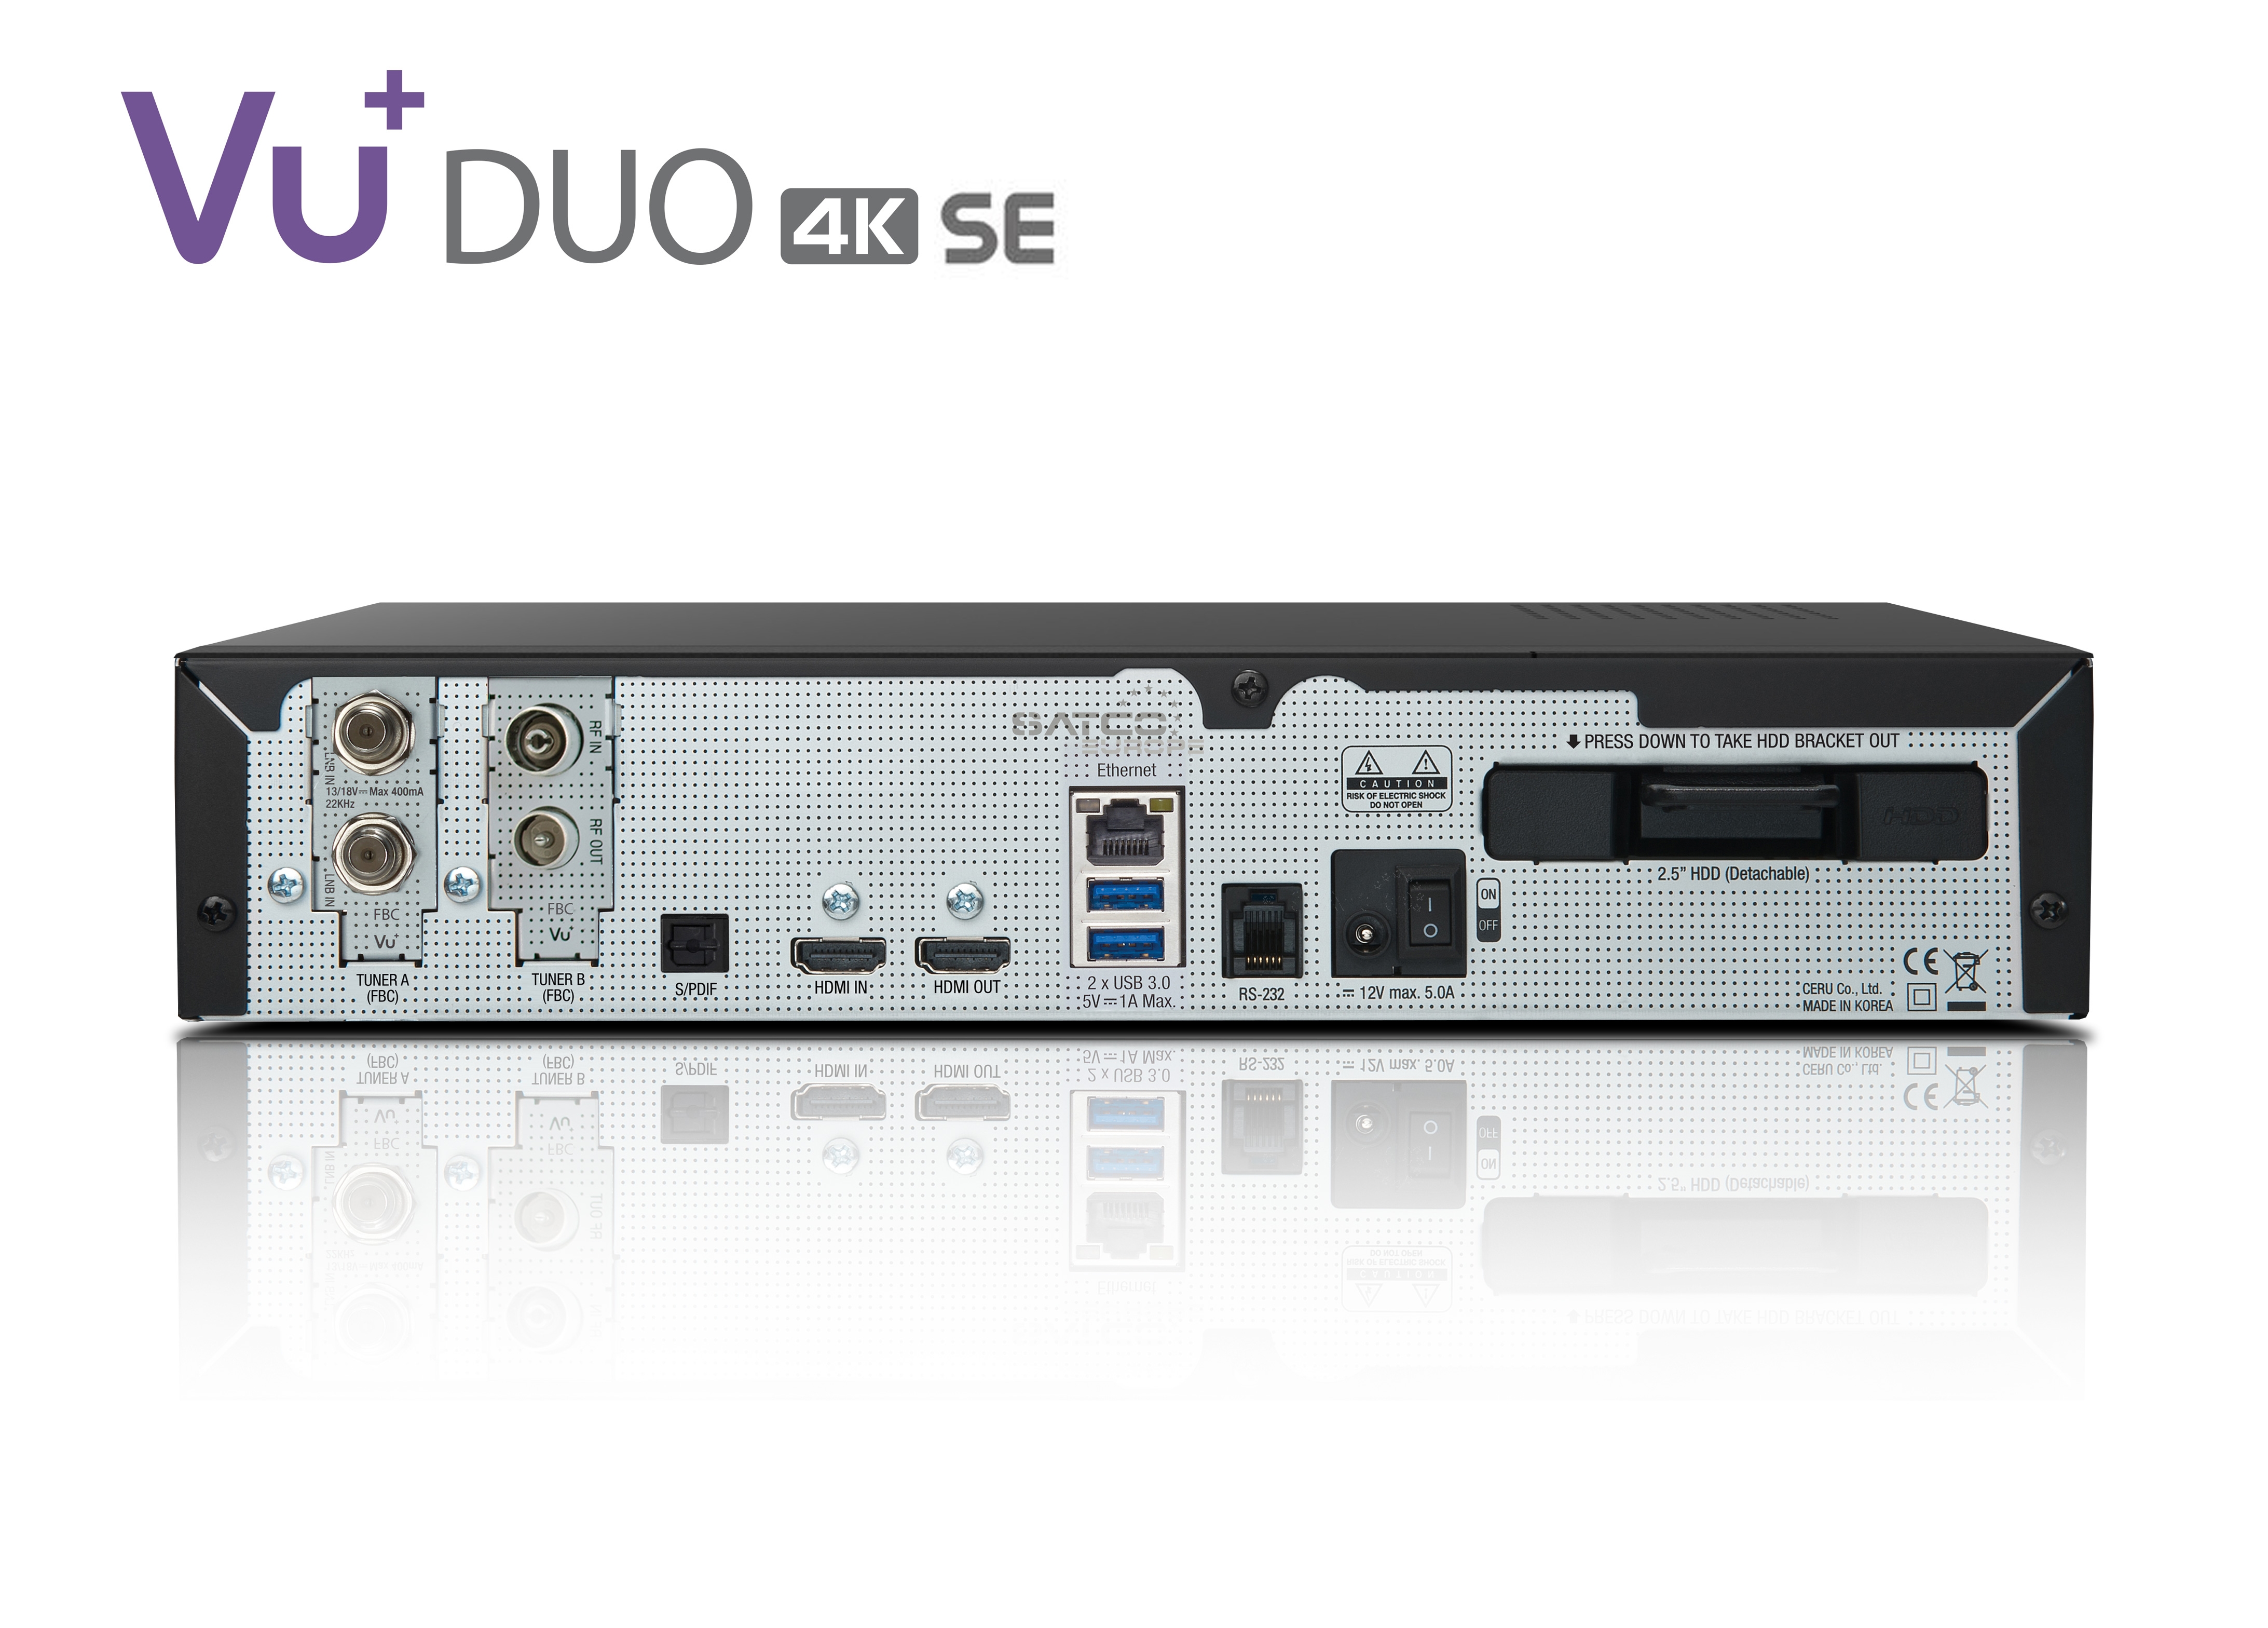 VU+ Duo 4K SE BT 1x DVB-S2X FBC Twin / 1x DVB-C FBC Tuner 500 GB HDD Linux Receiver UHD 2160p